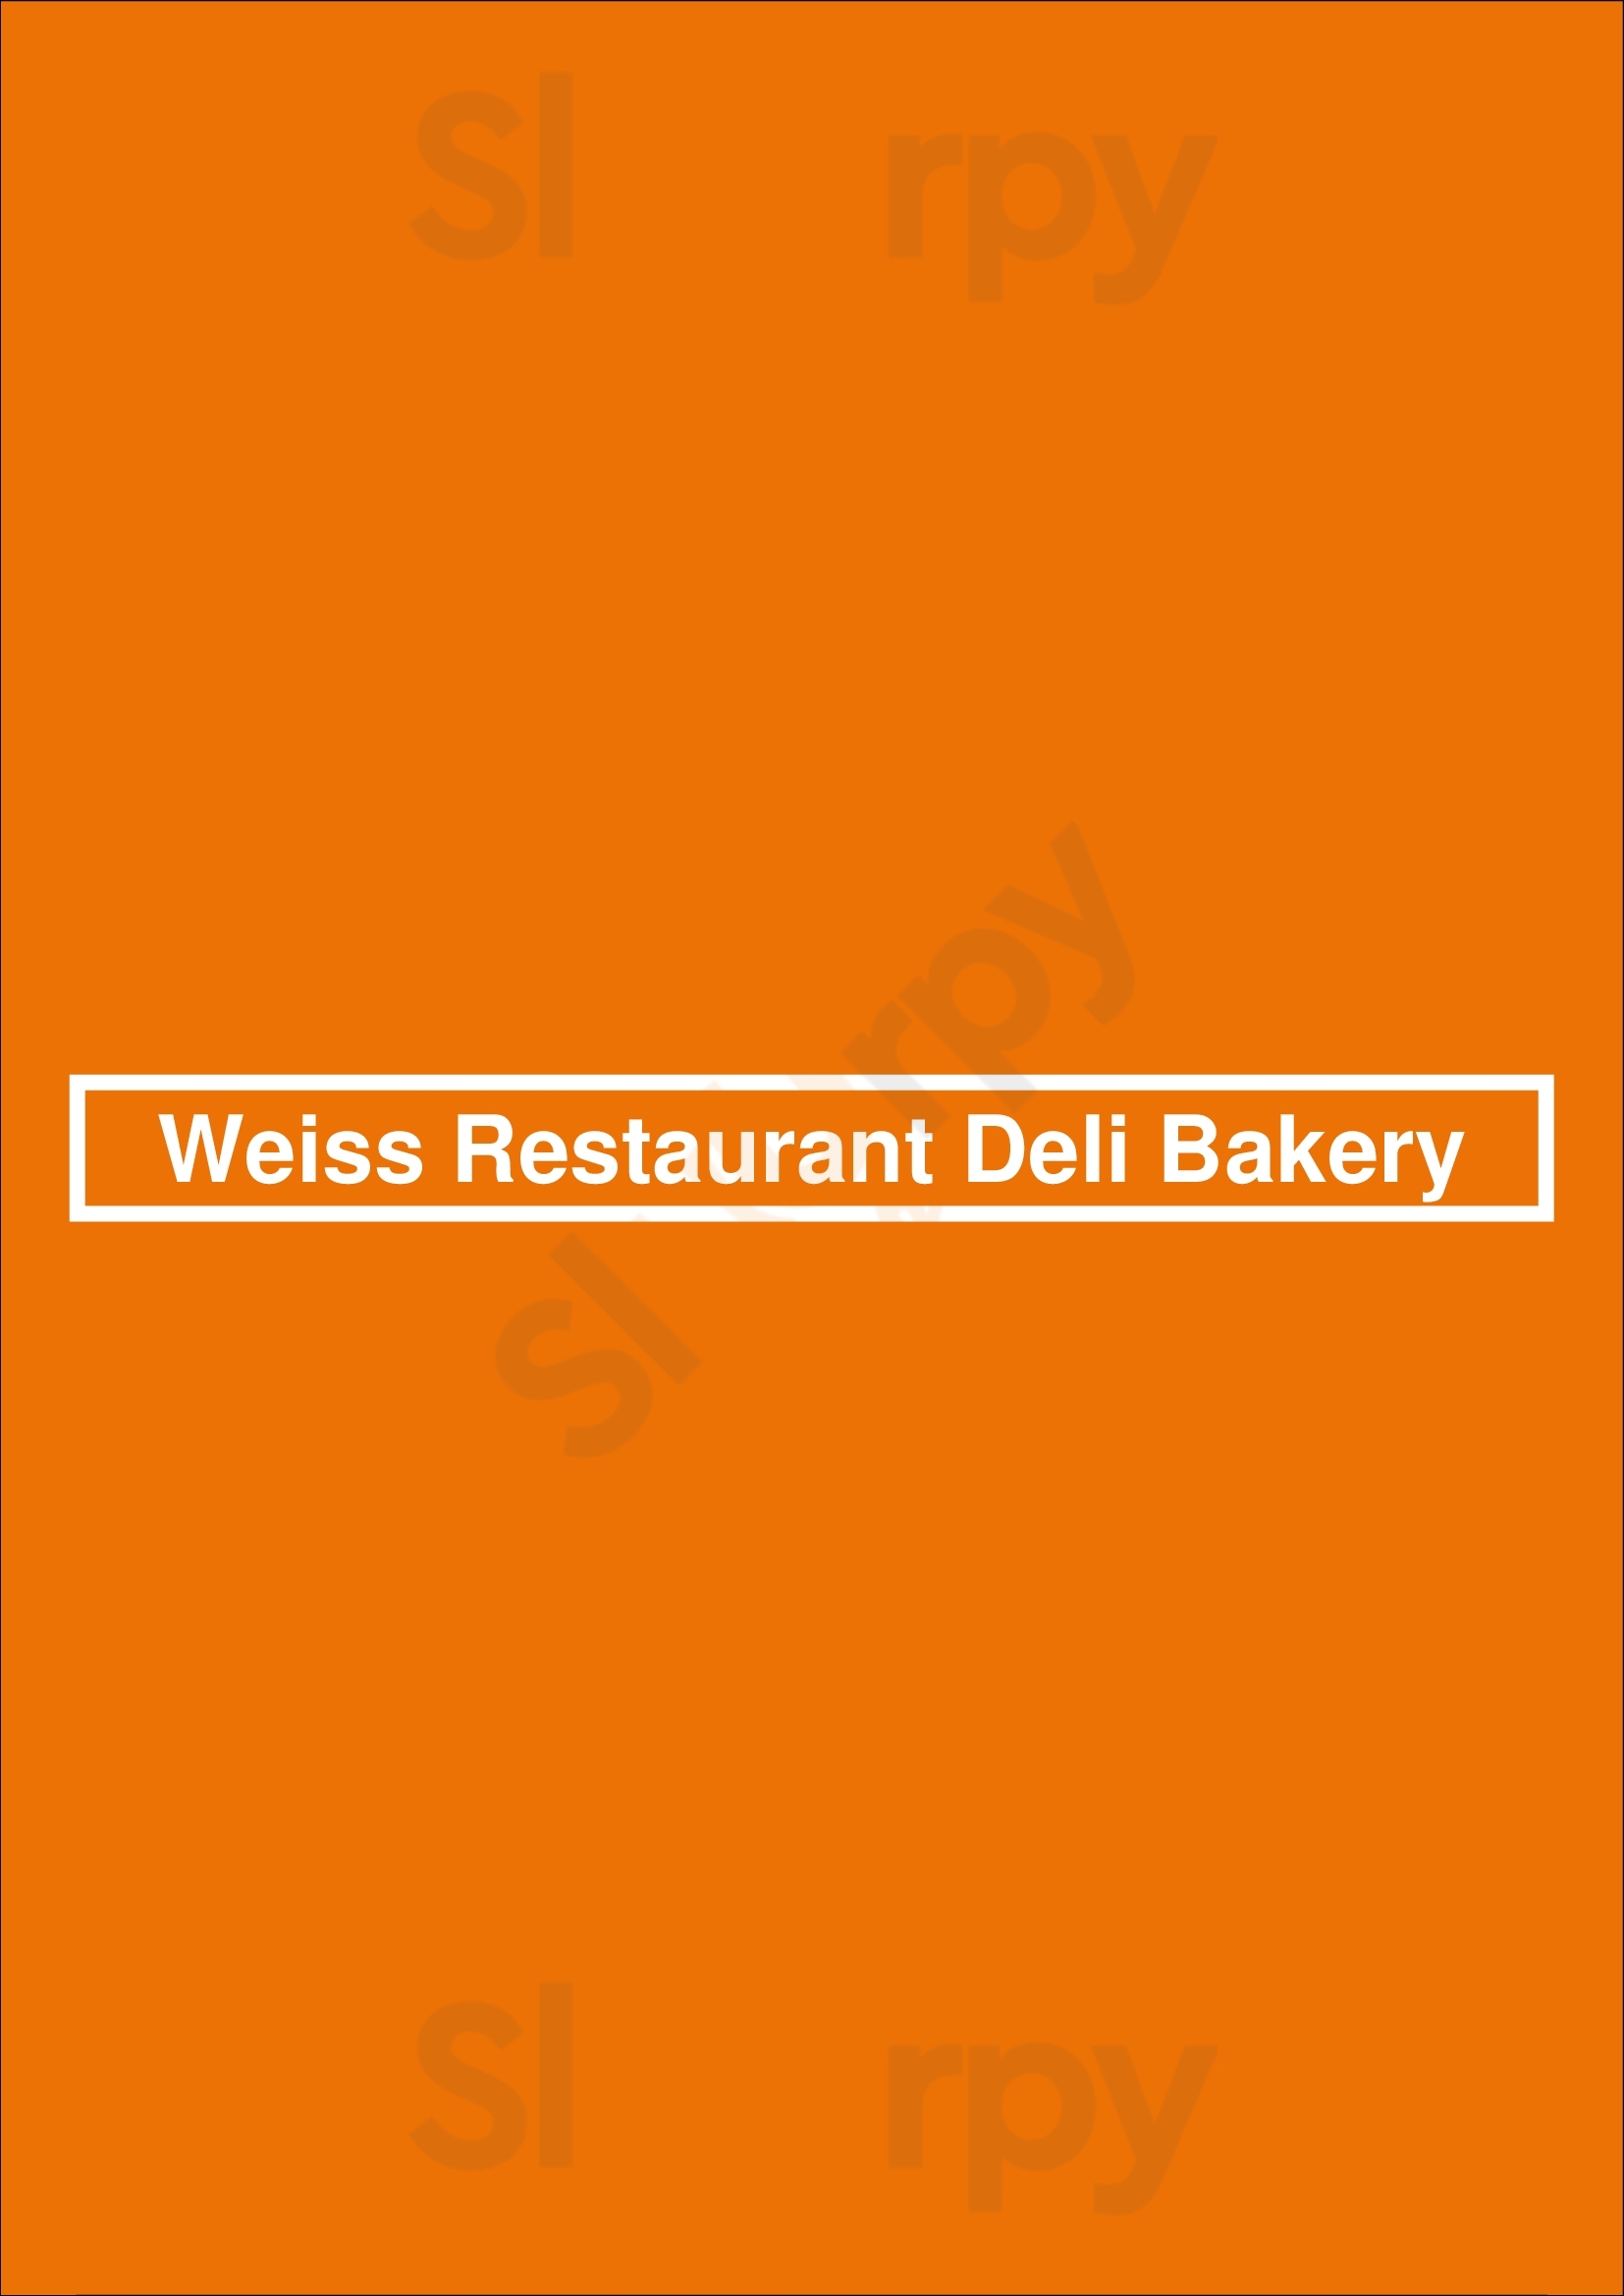 Weiss Restaurant Deli Bakery Henderson Menu - 1